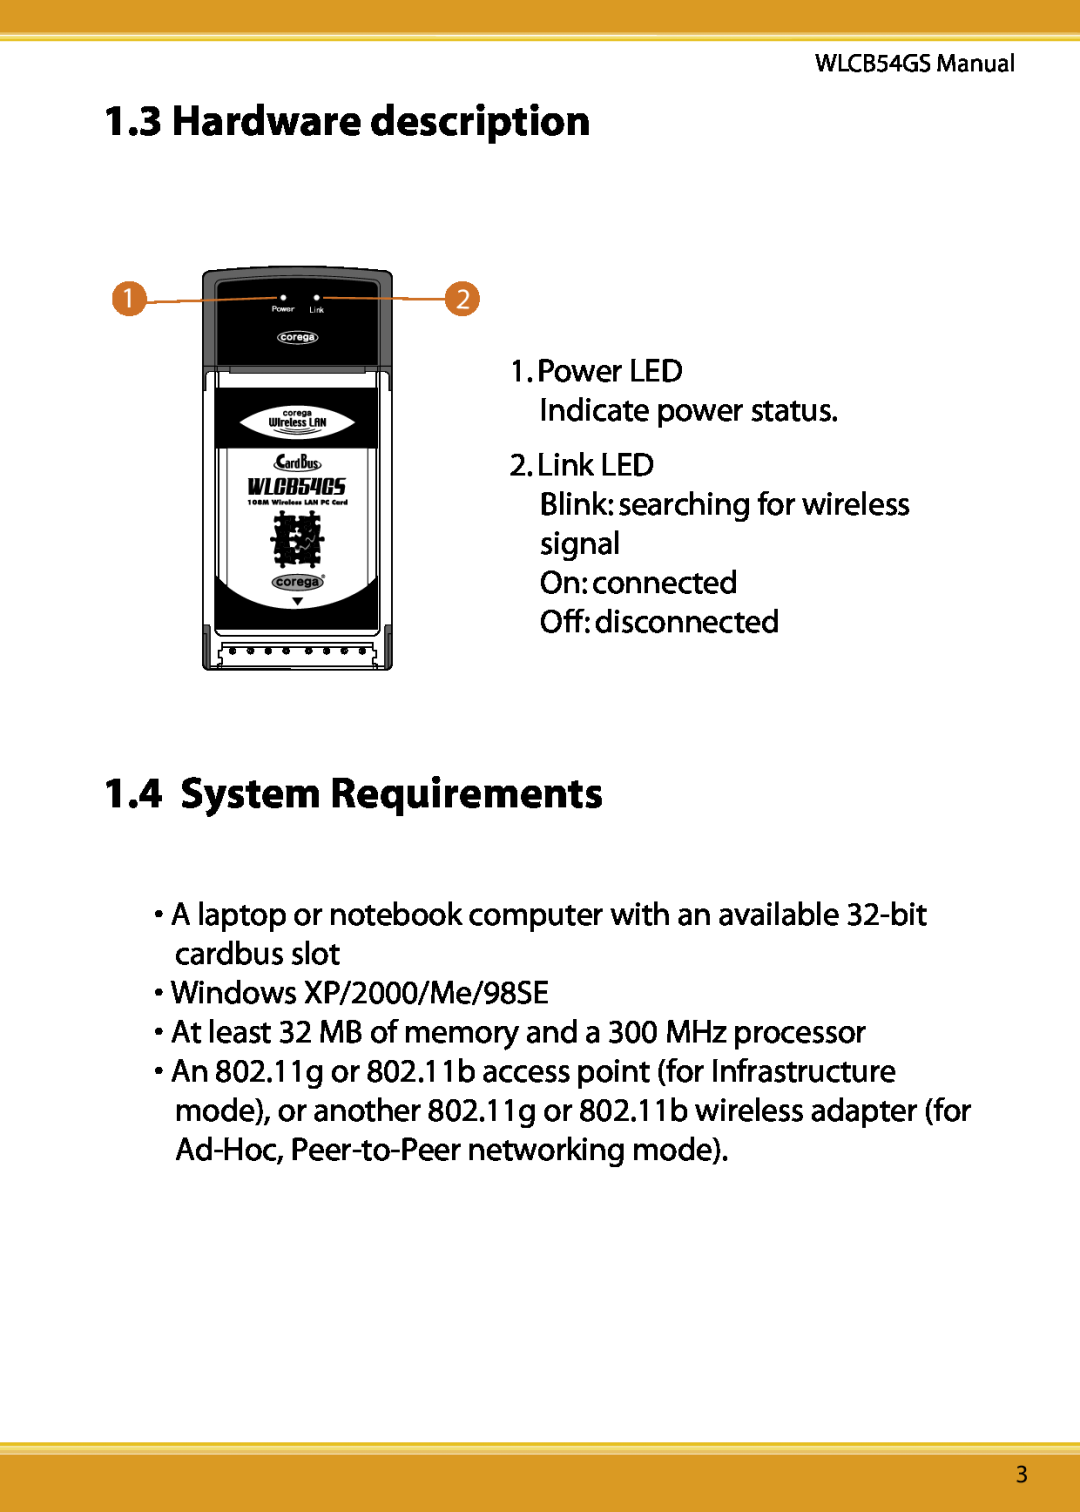 Corega 108M user manual Hardware description, System Requirements 